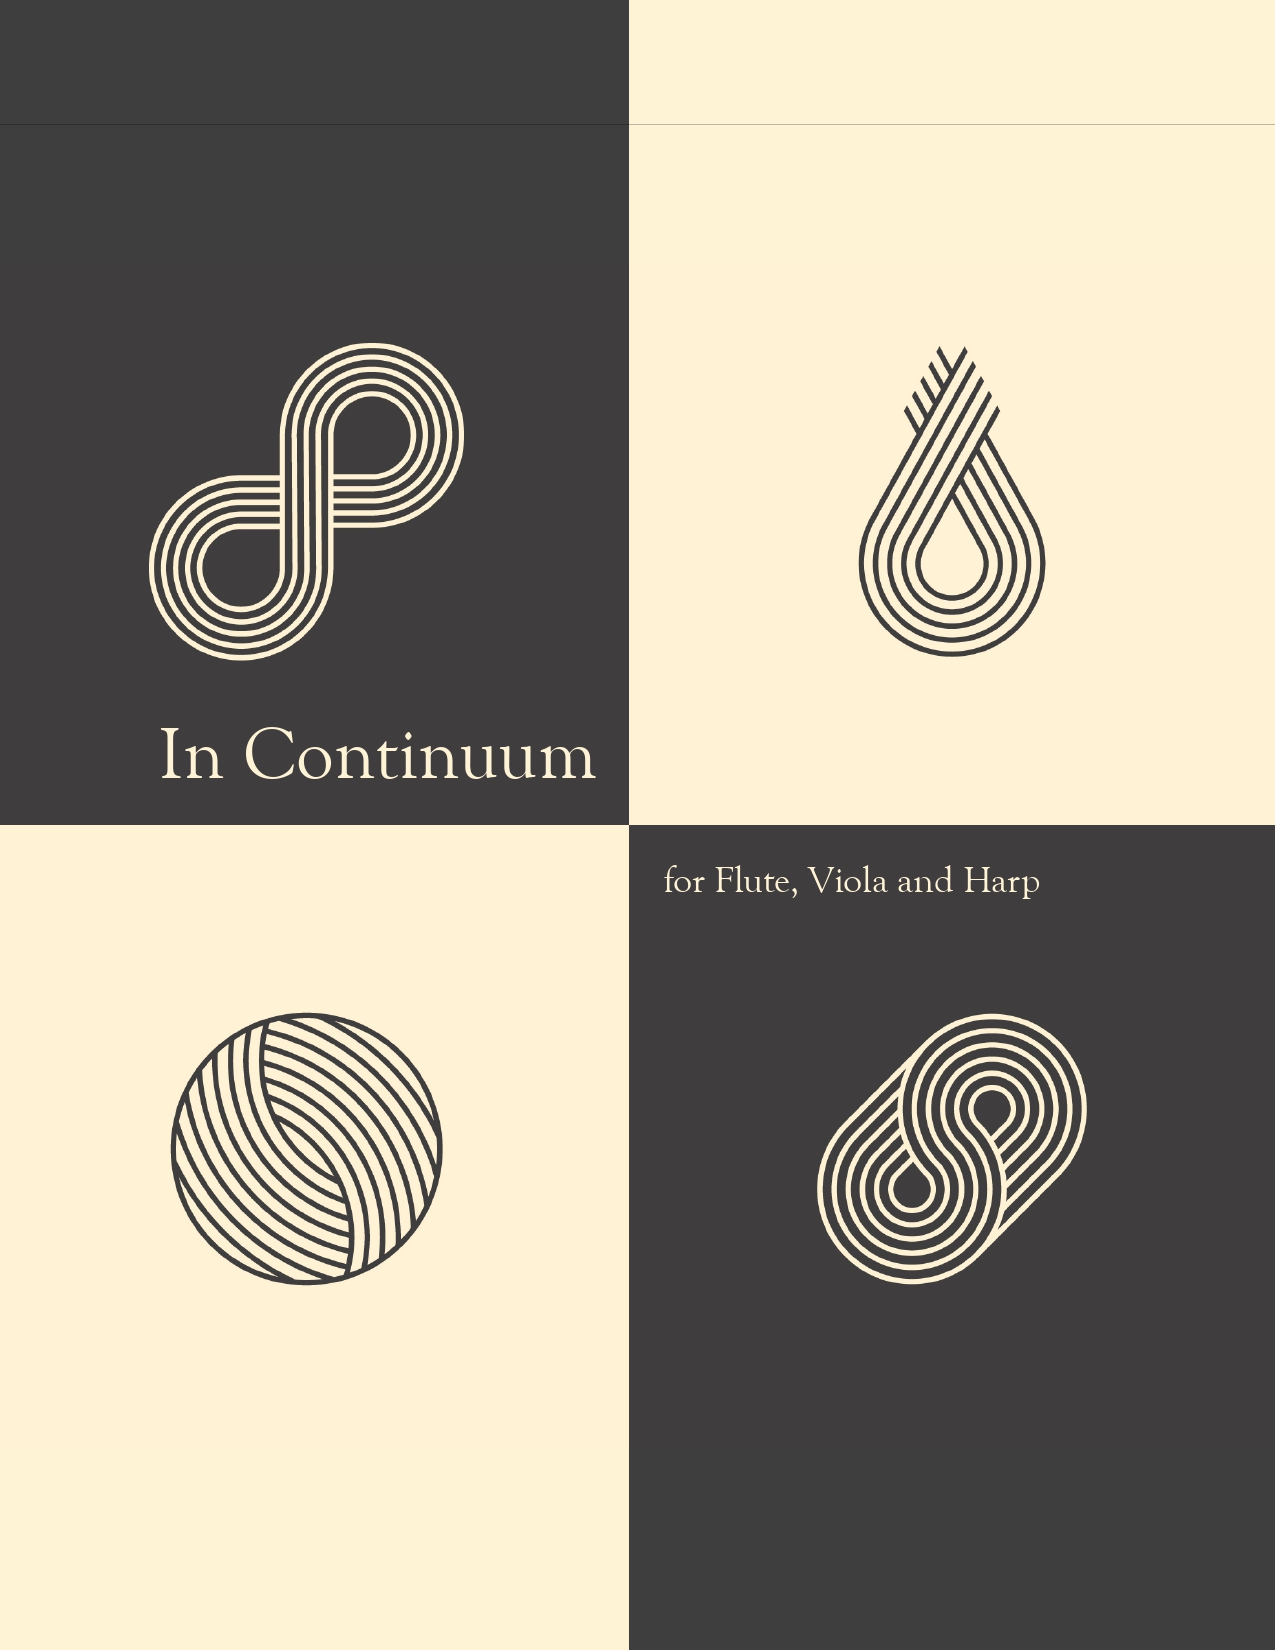 In Continuum Score for Flute, Viola, and Harp